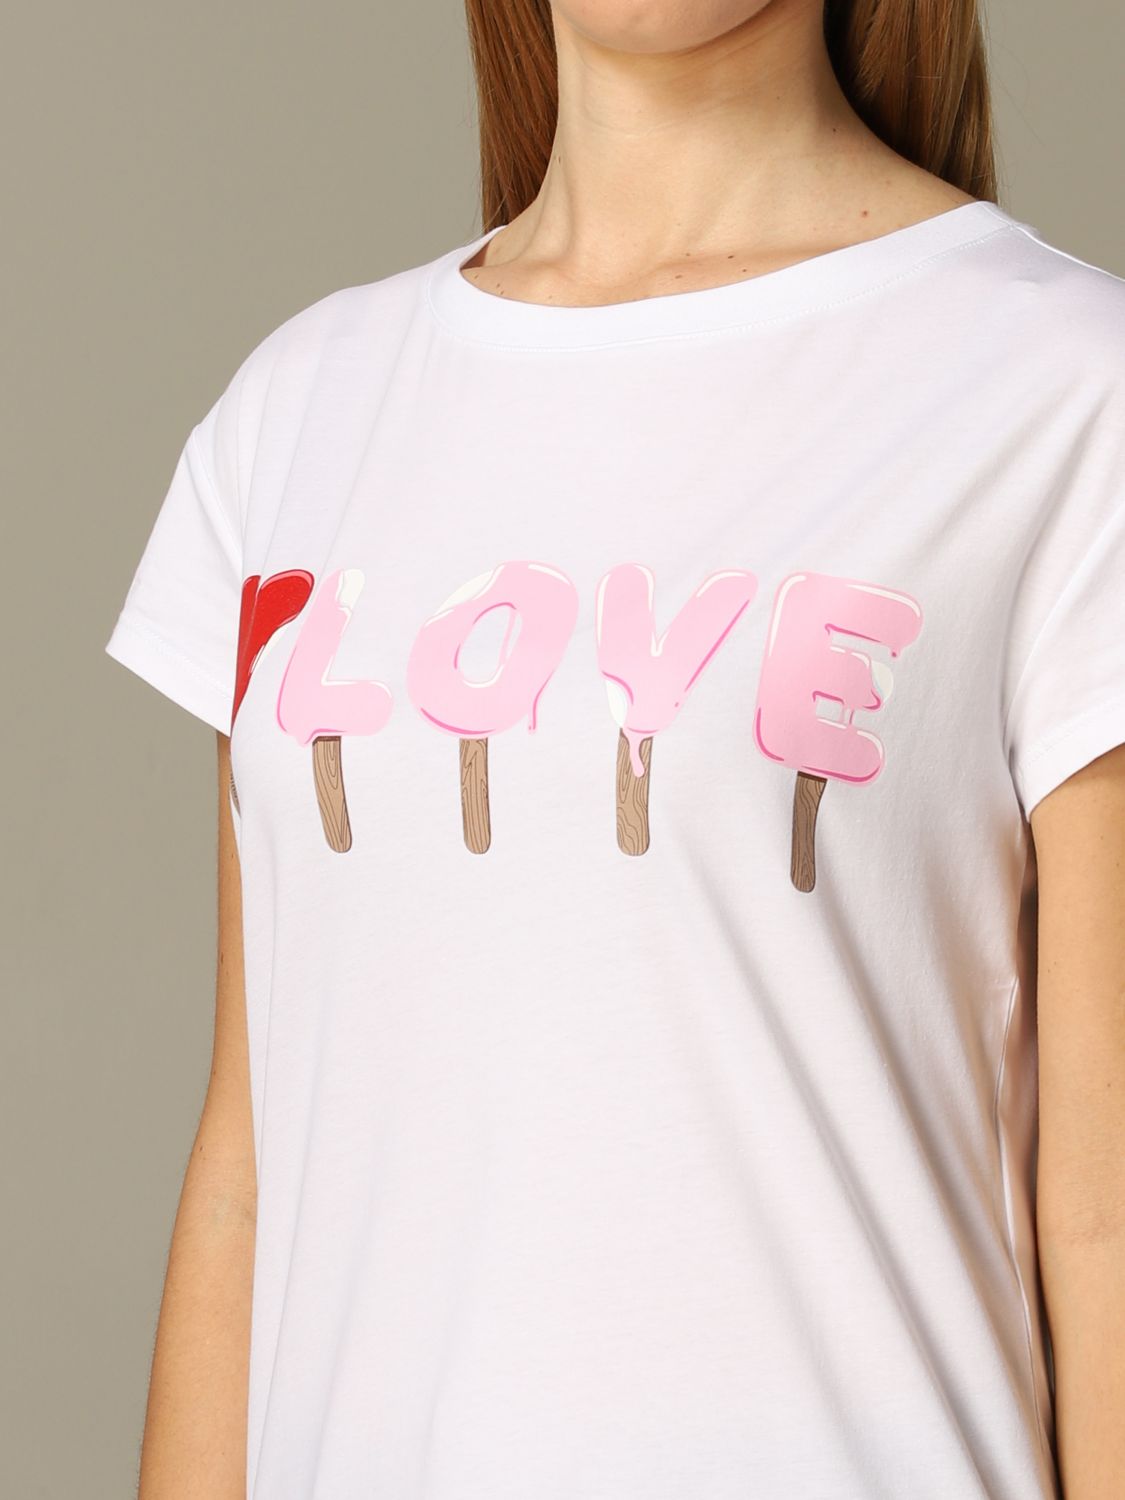 love by love moschino t shirt